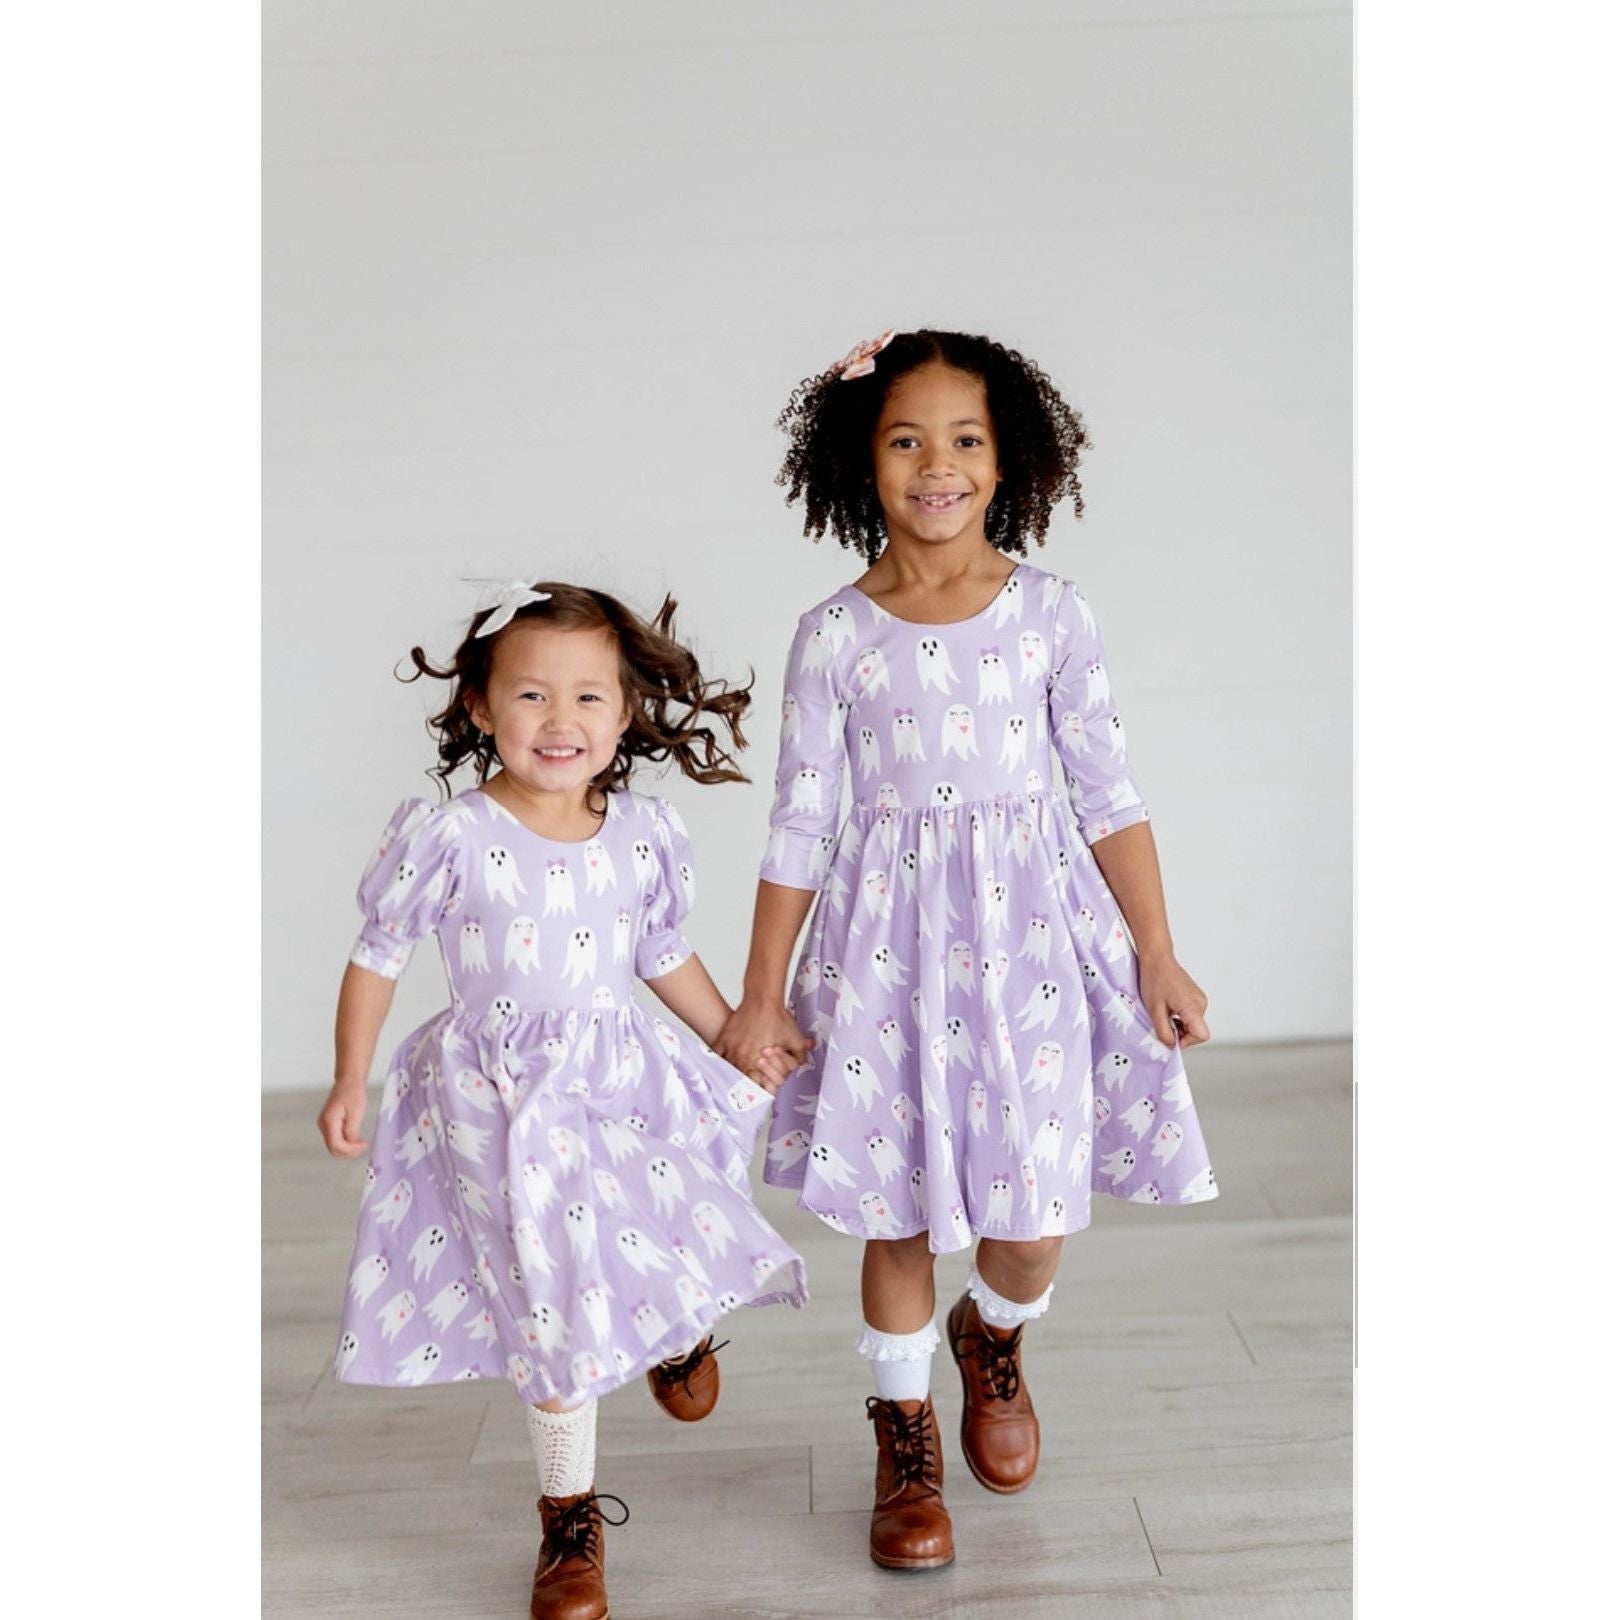 girls wearing 3/4 length sleeve purple dress with girly ghost print